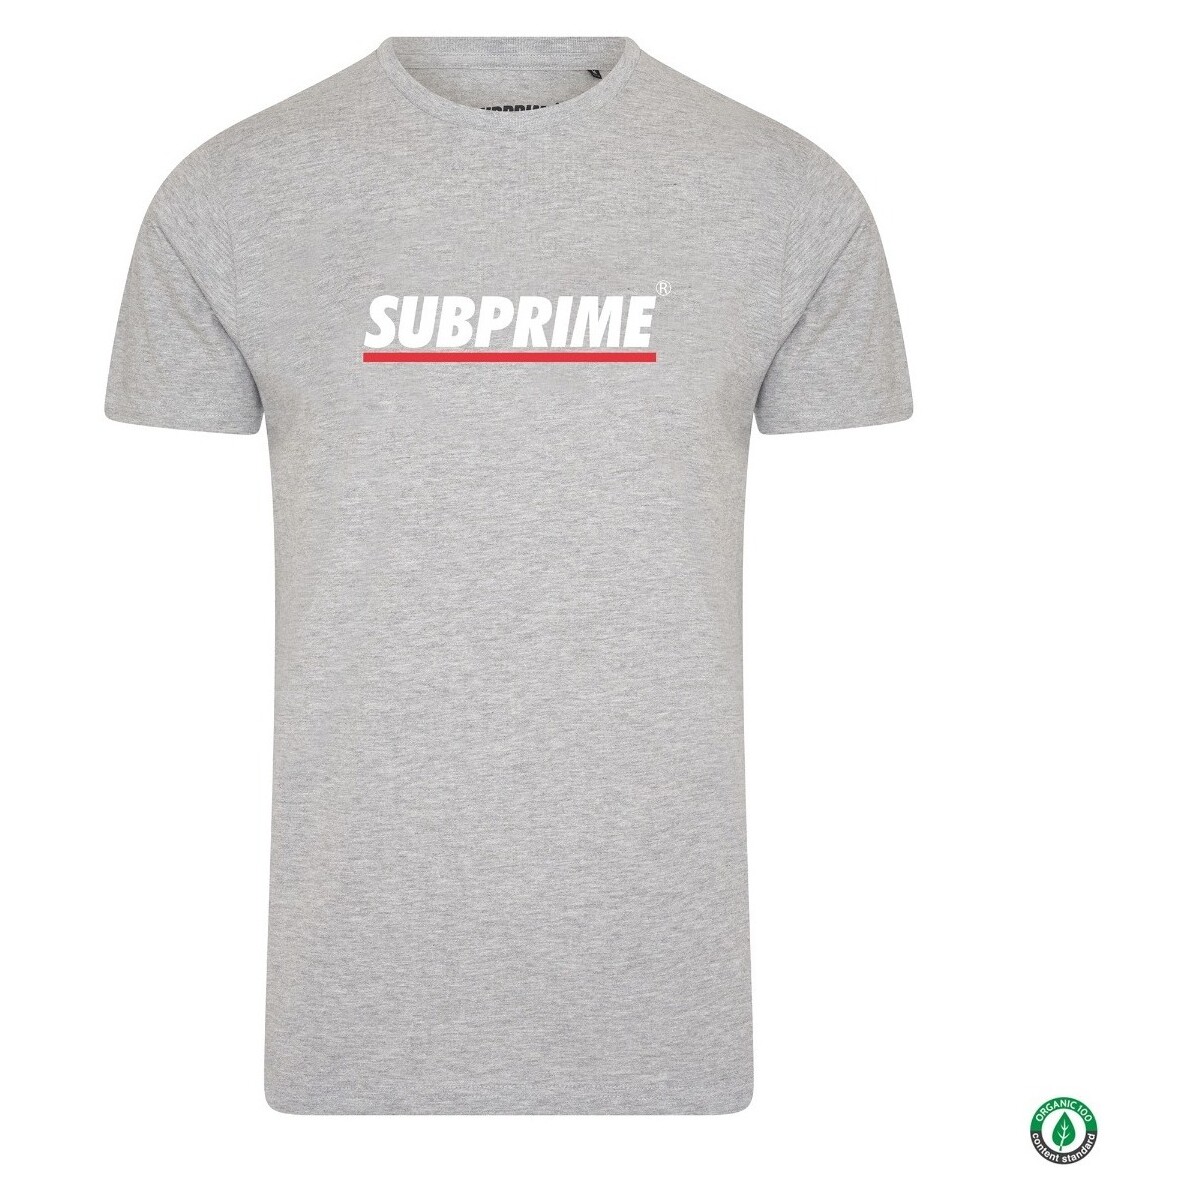 Kleidung T-Shirts Subprime Shirt Stripe Grey Grau